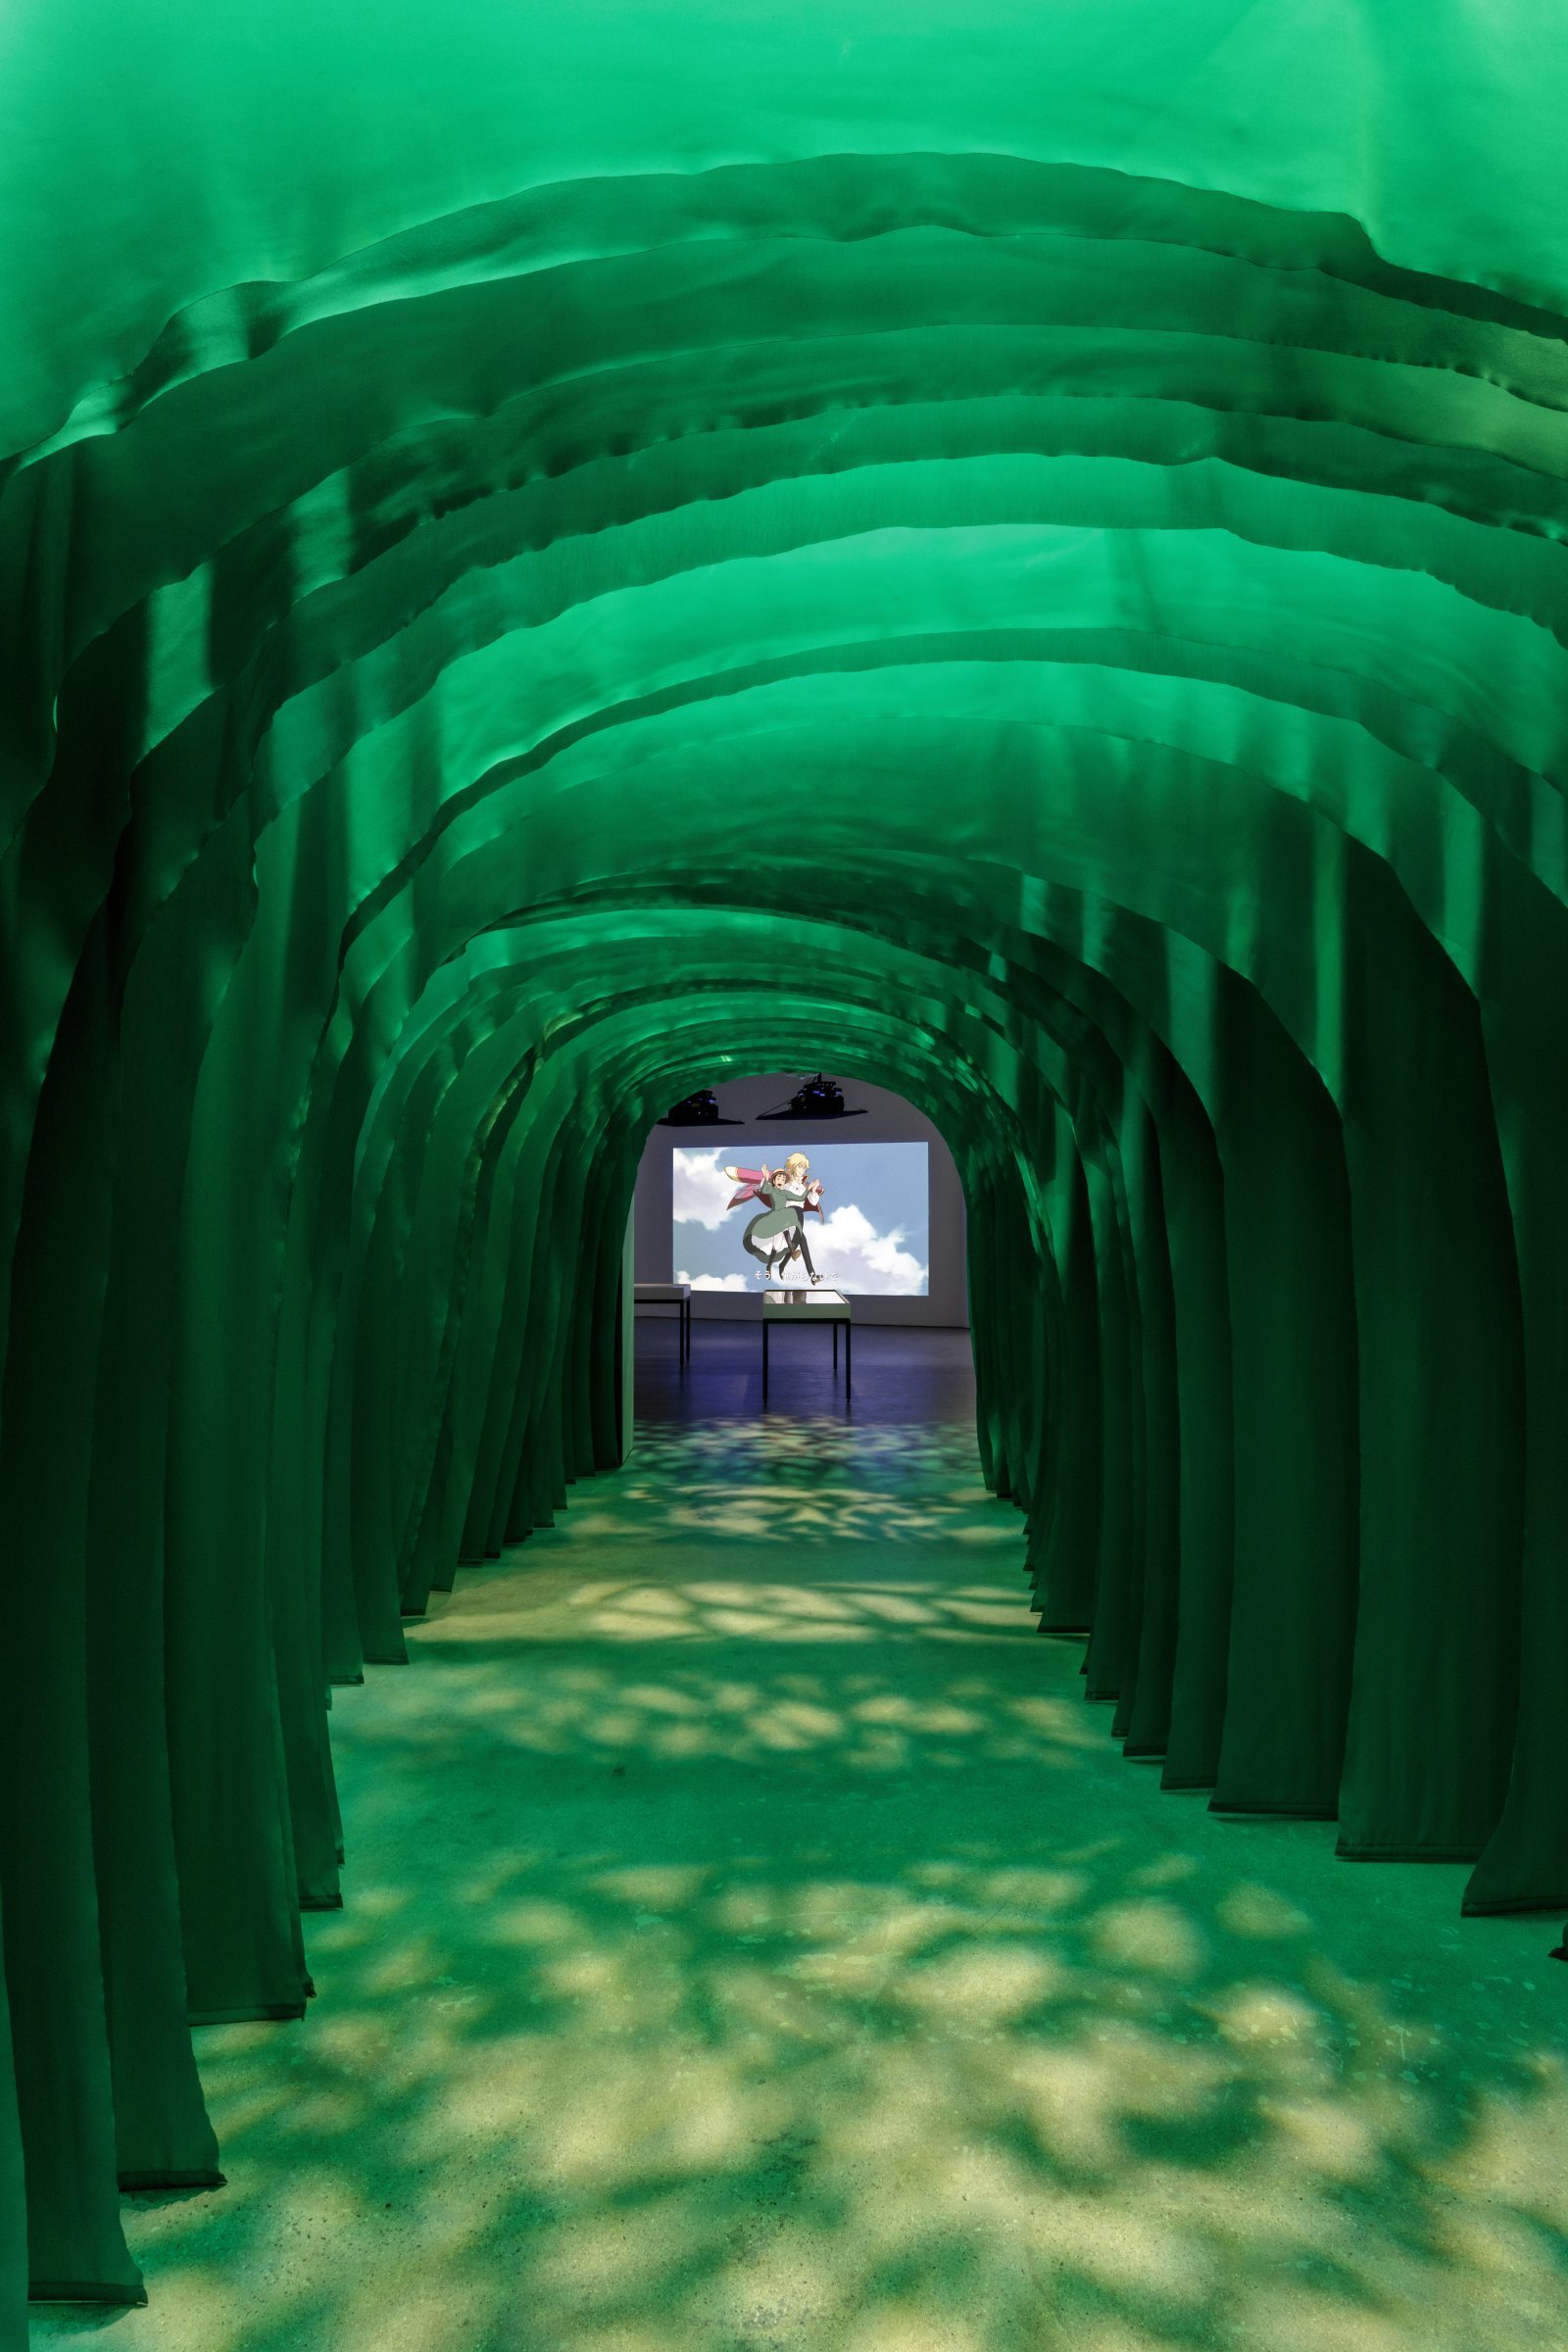 LAのアカデミー映画博物館のオープニング特別企画展は、世界の宮崎駿